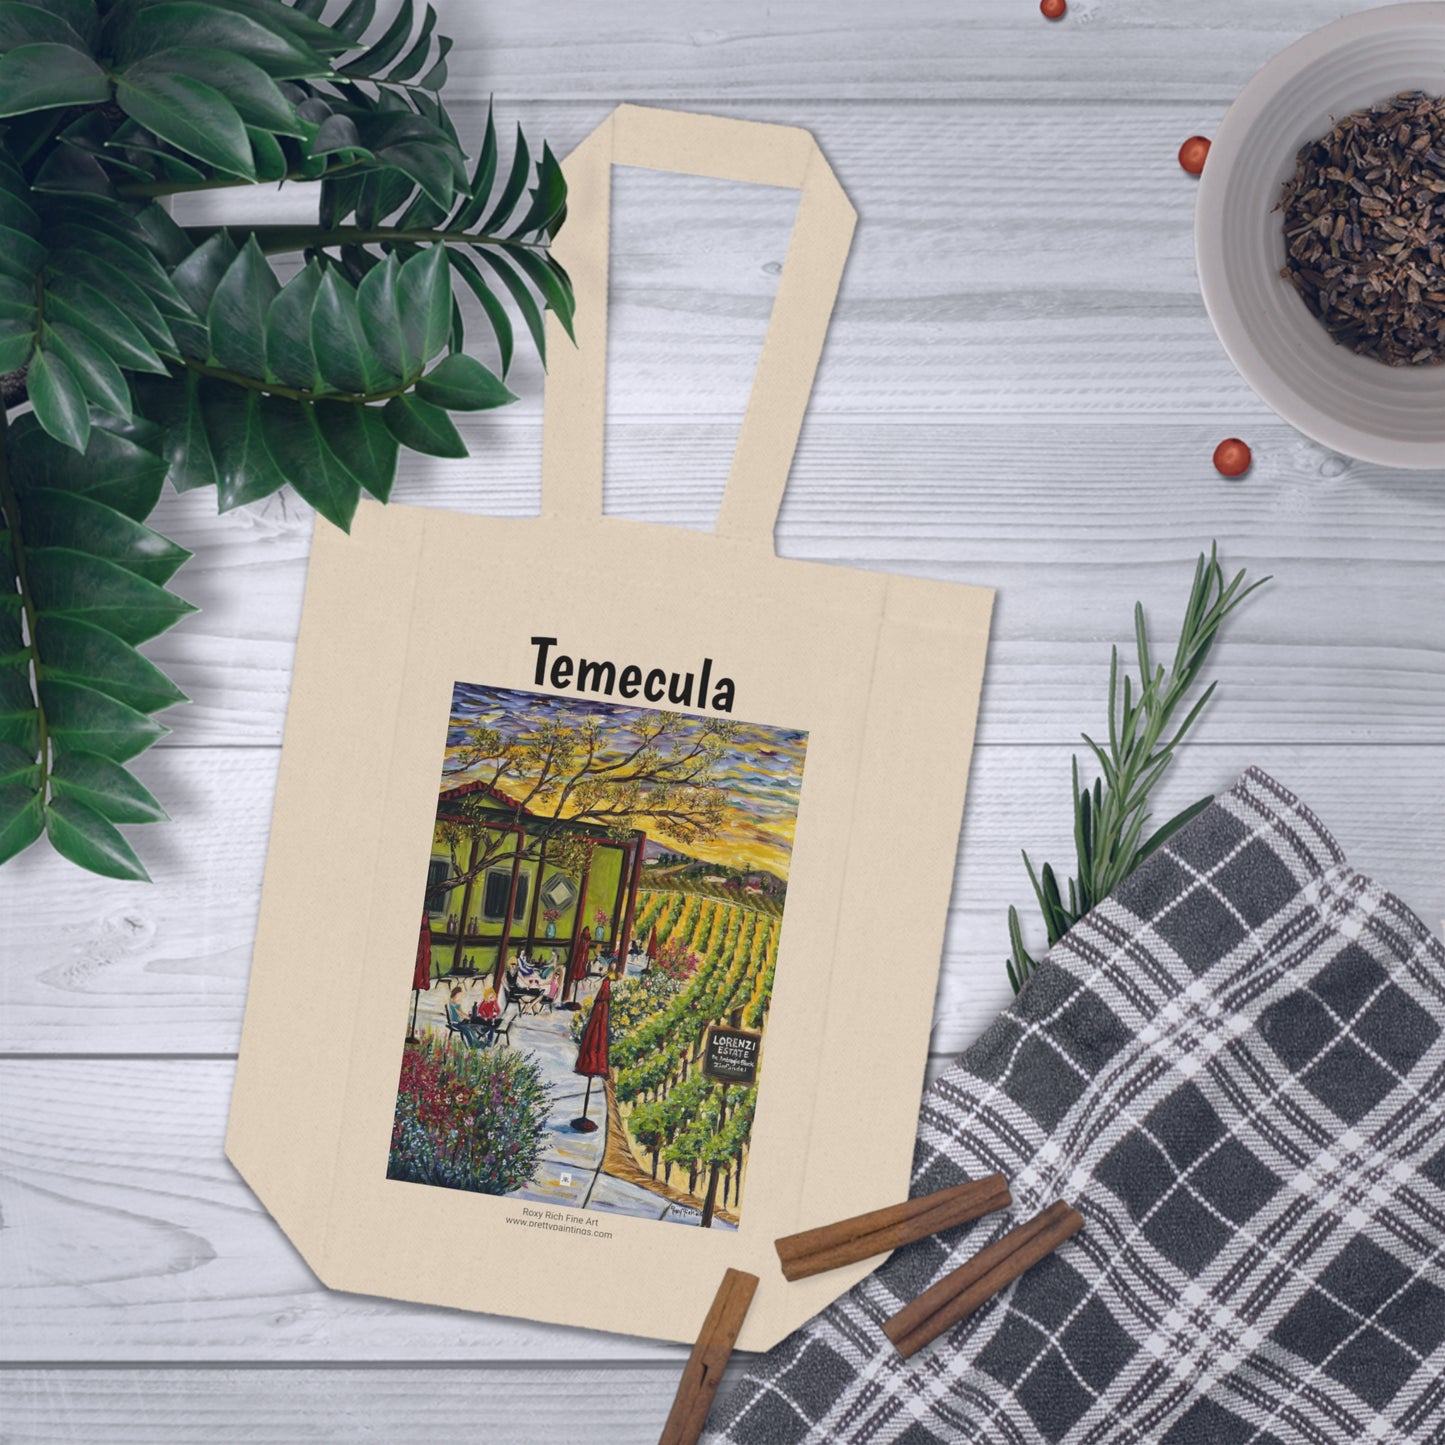 Temecula Double Wine Tote Bag featuring "Lorenzi Estate Terrace" painting